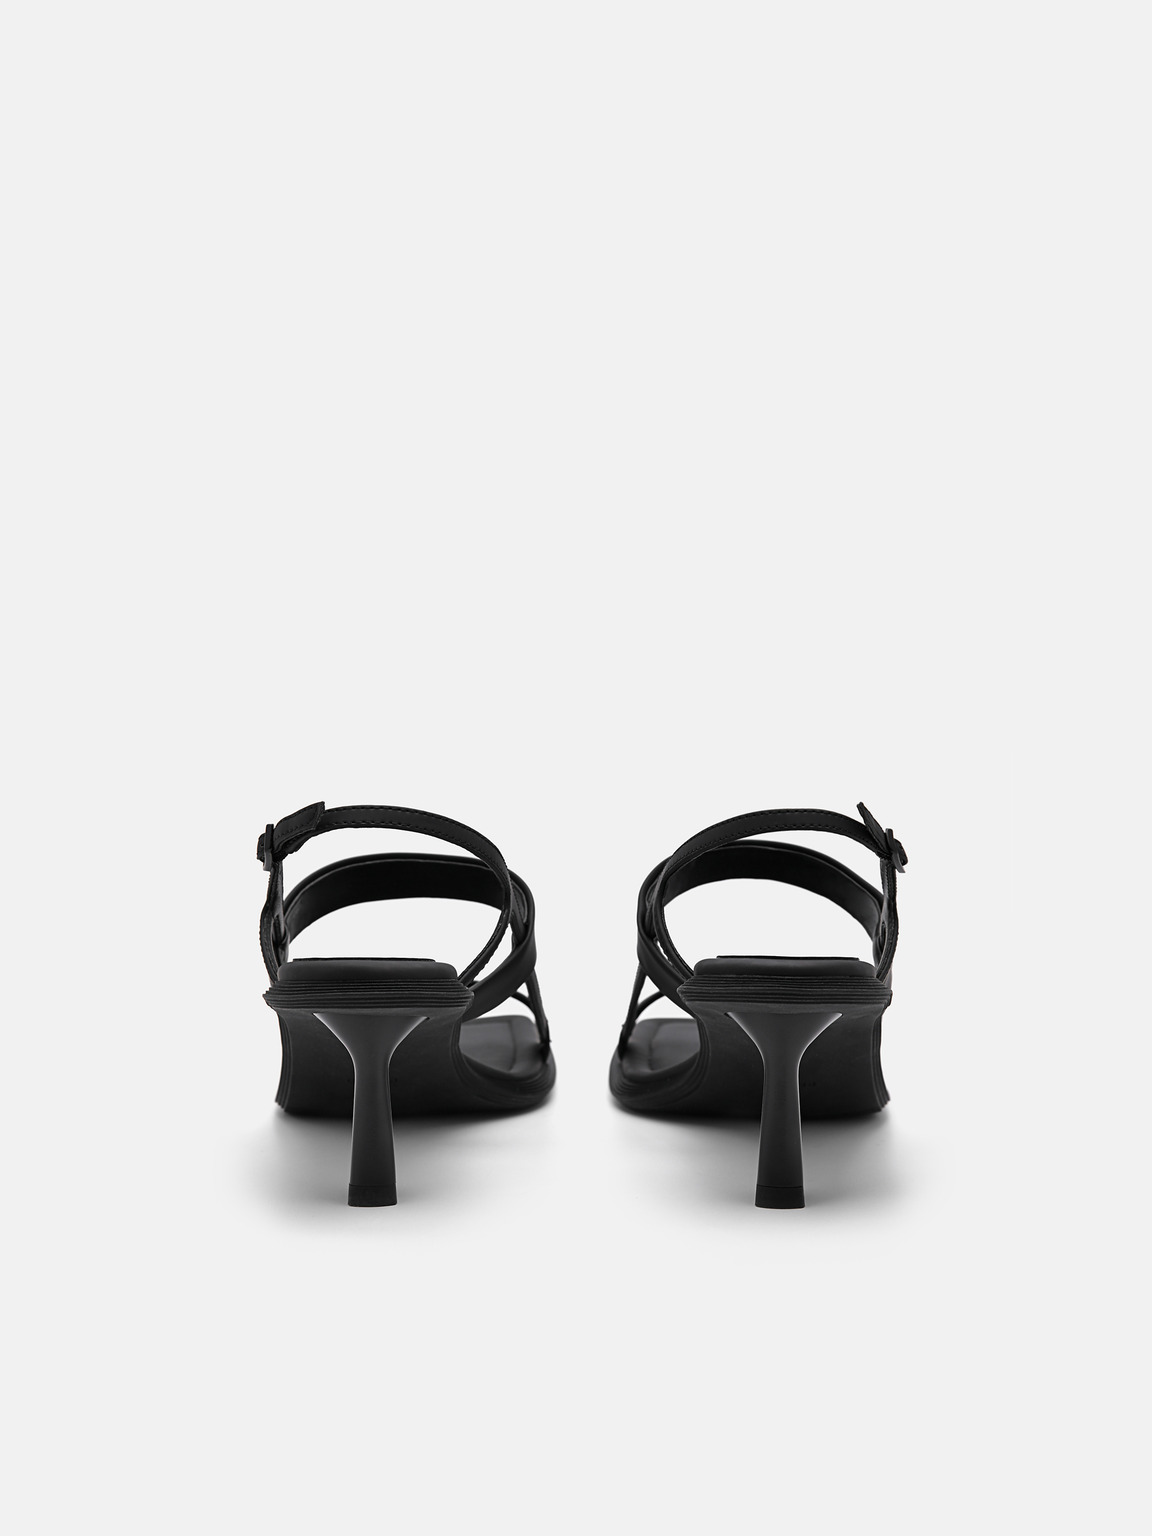 Yara Heel Sandals, Black